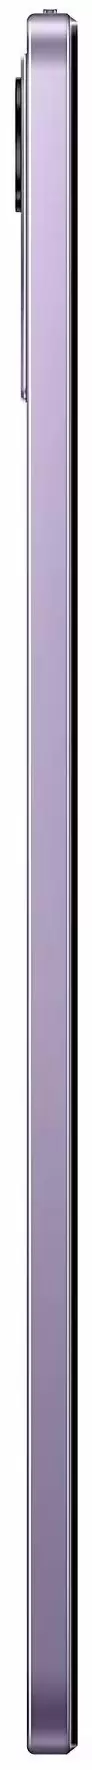 Tabletă Xiaomi Redmi Pad SE 6/128GB, violet